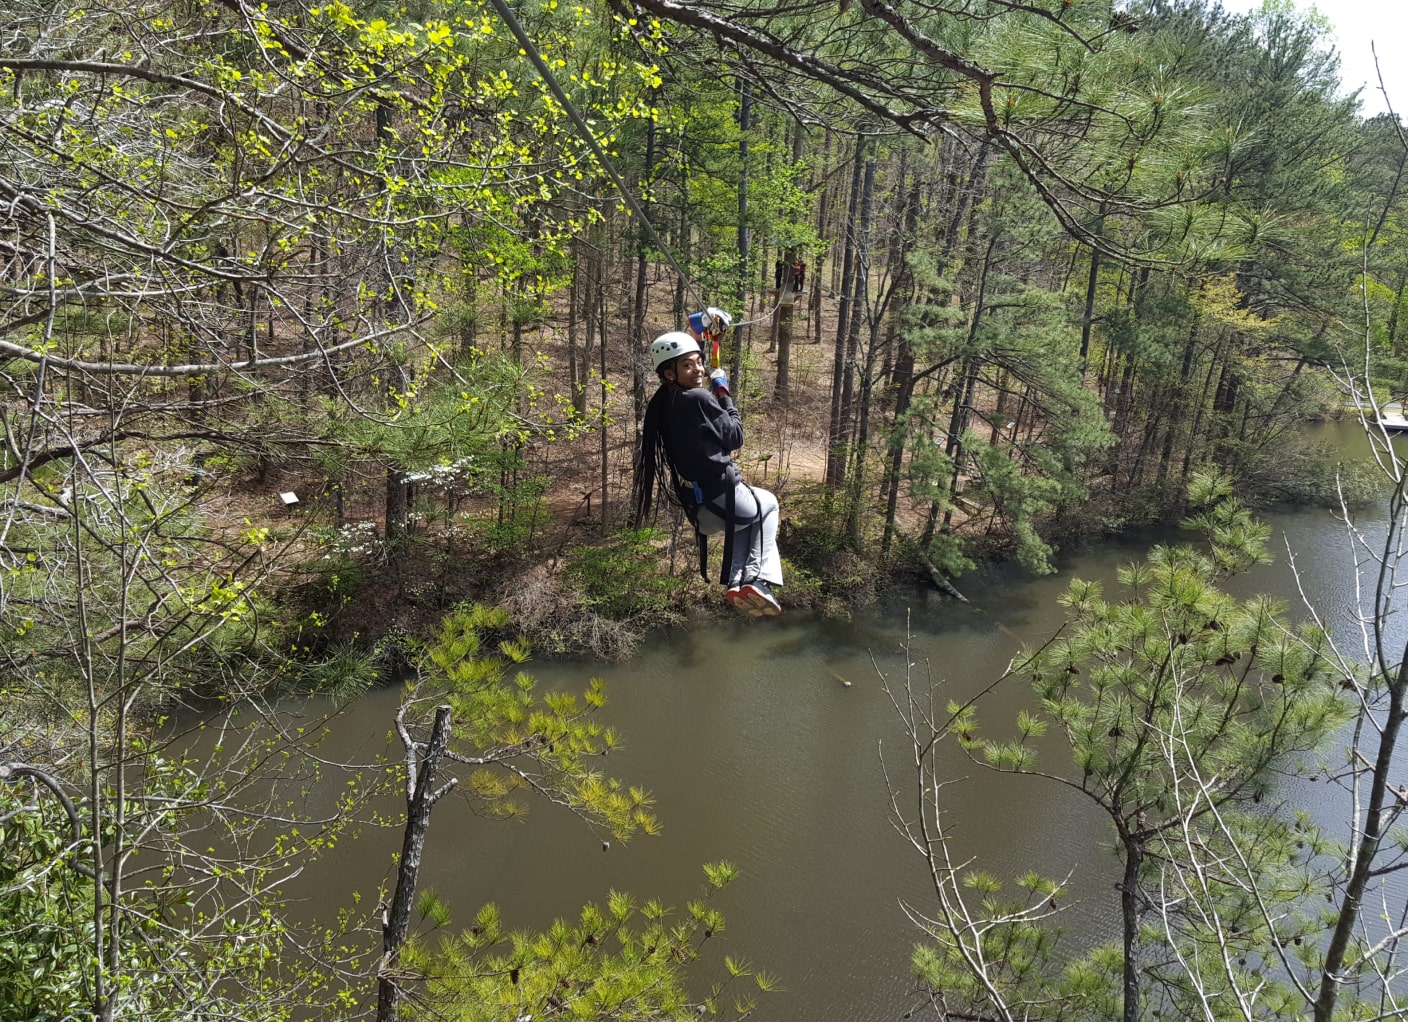 person on canopy tour ziplining across water at georgia zipline adventure park